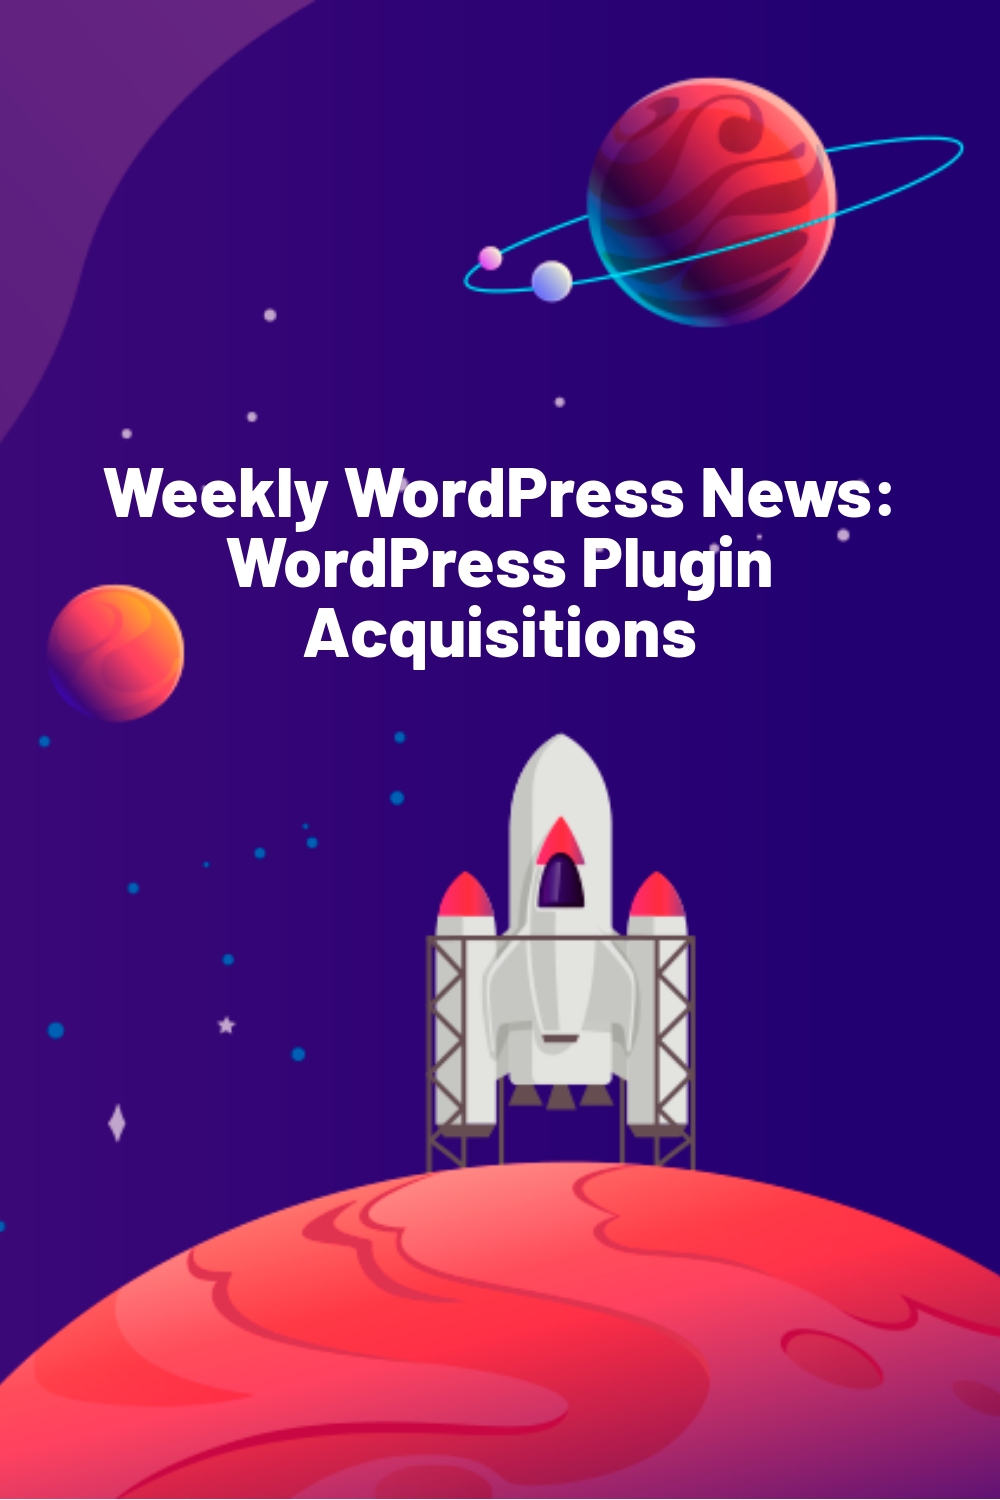 Weekly WordPress News: WordPress Plugin Acquisitions